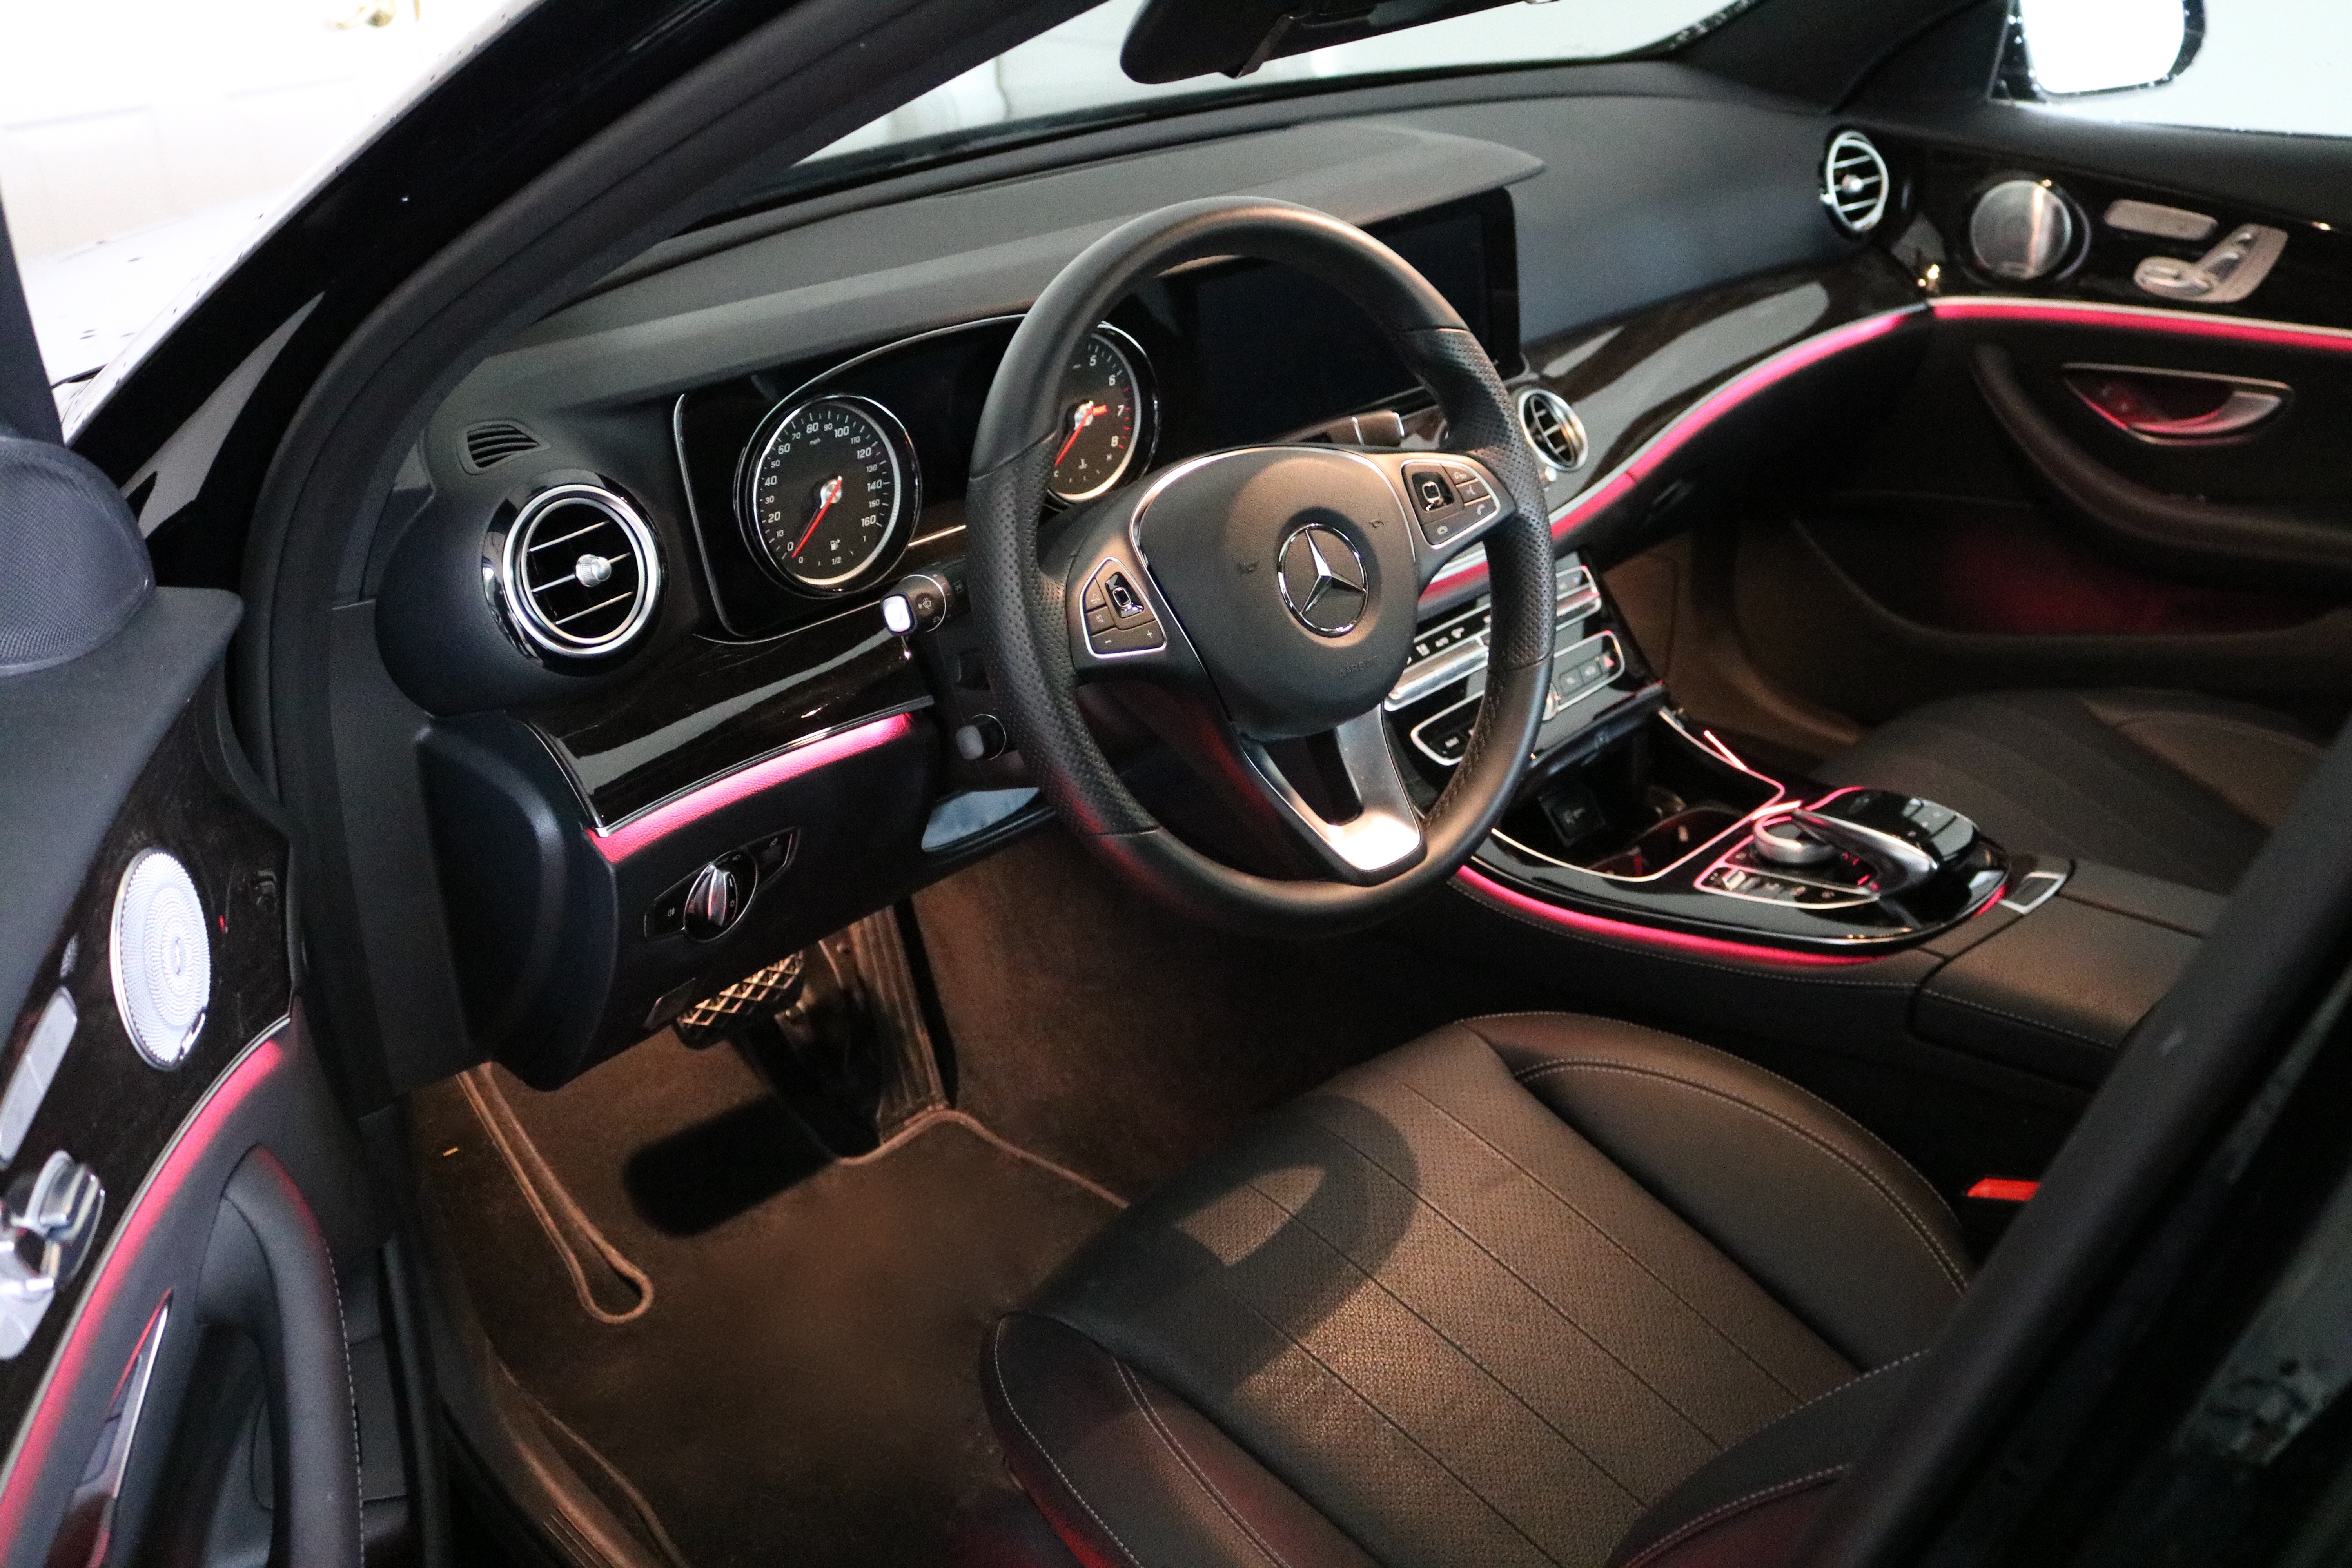 Mercedes Benz E-300 Interior Ambiance Lighting - The Luxury Lifestyle Magazine